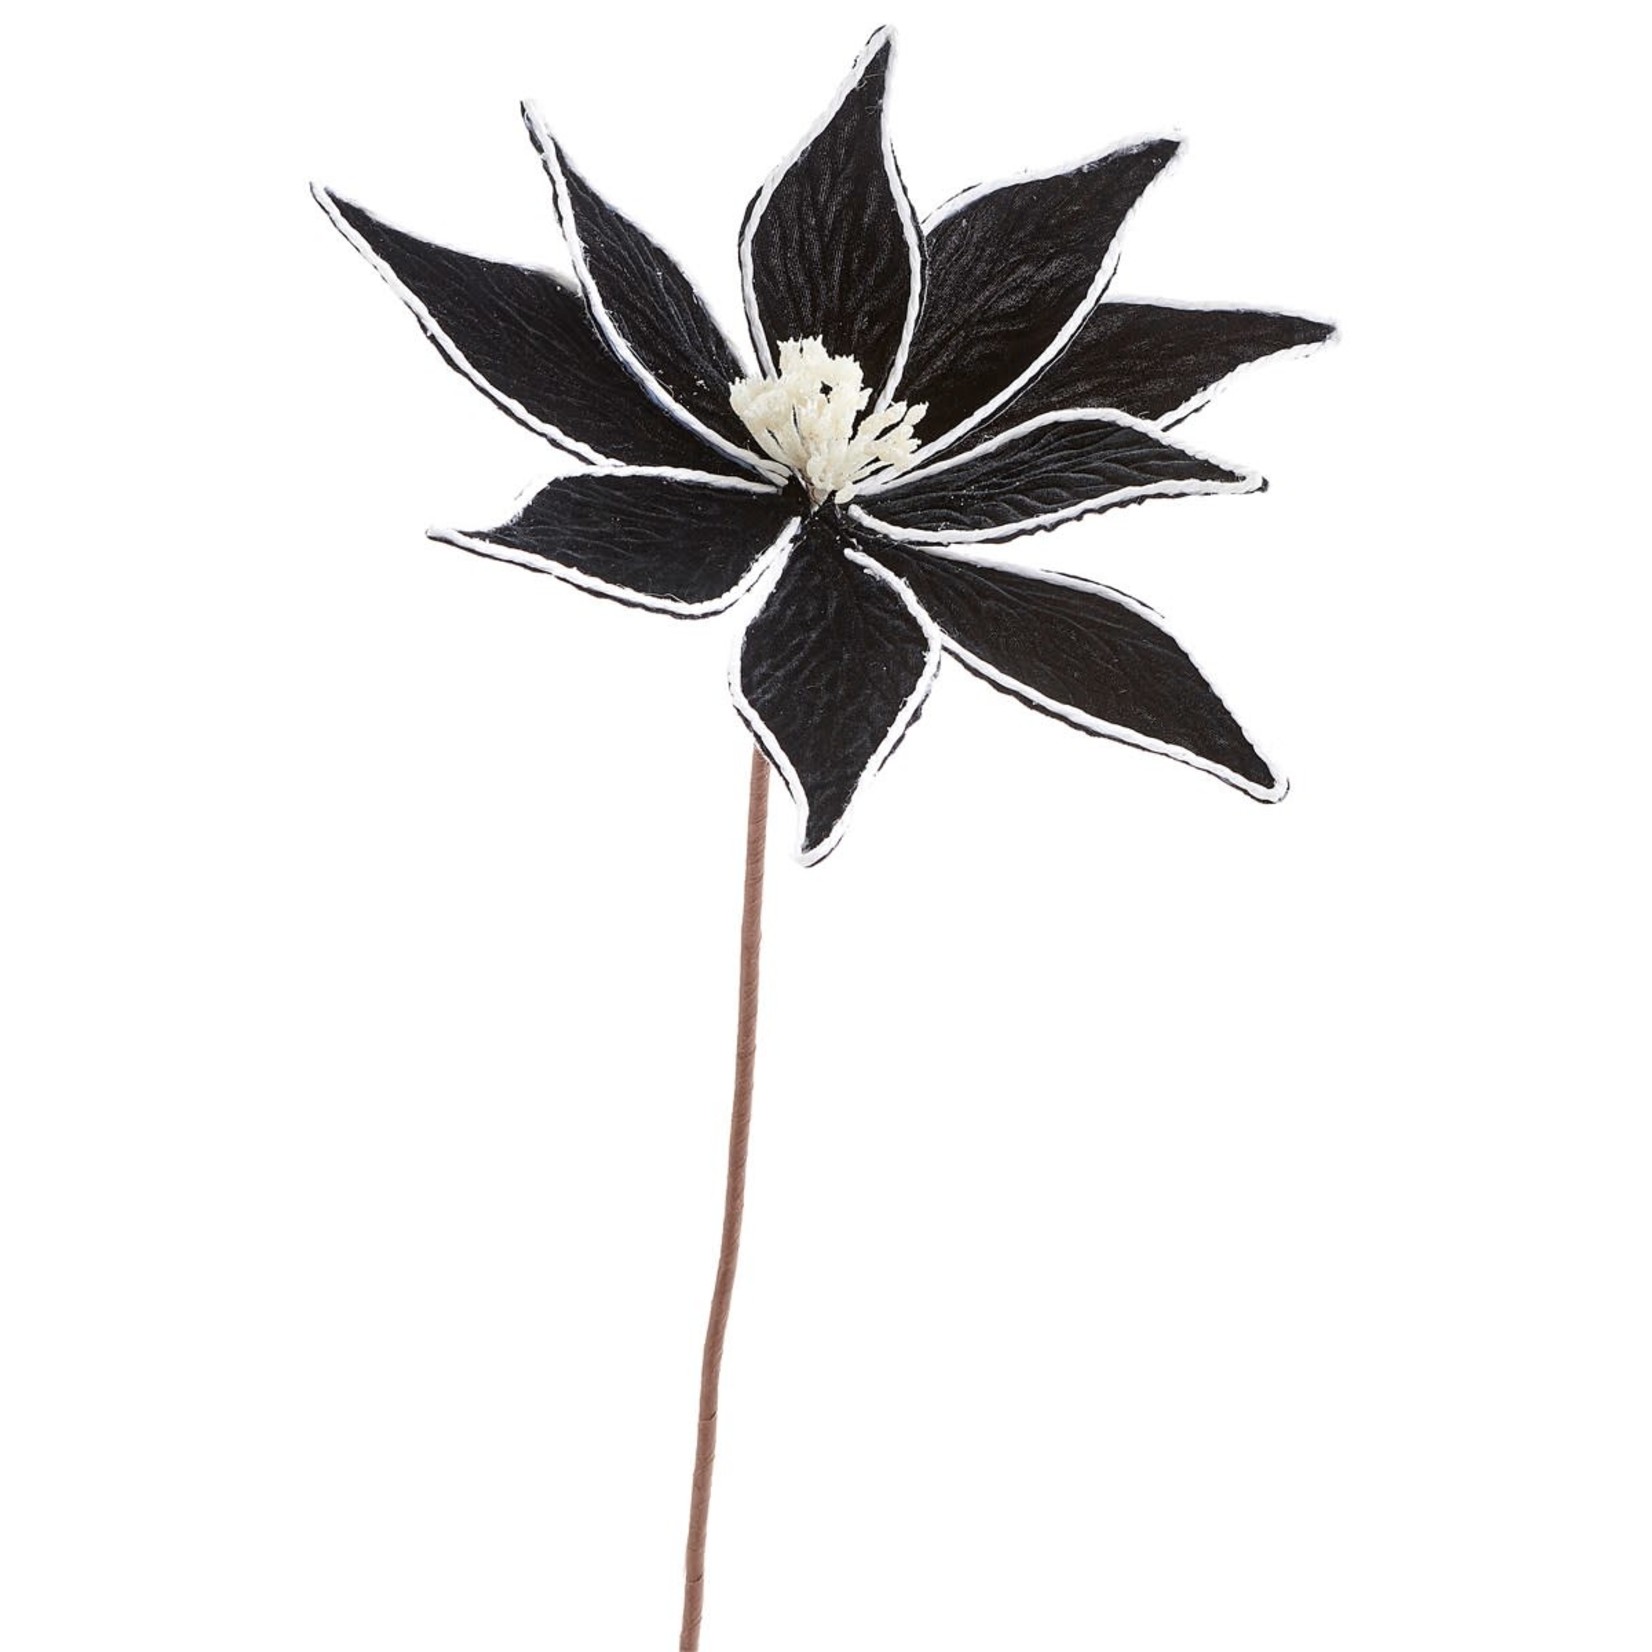 Black Poinsettia with Stem